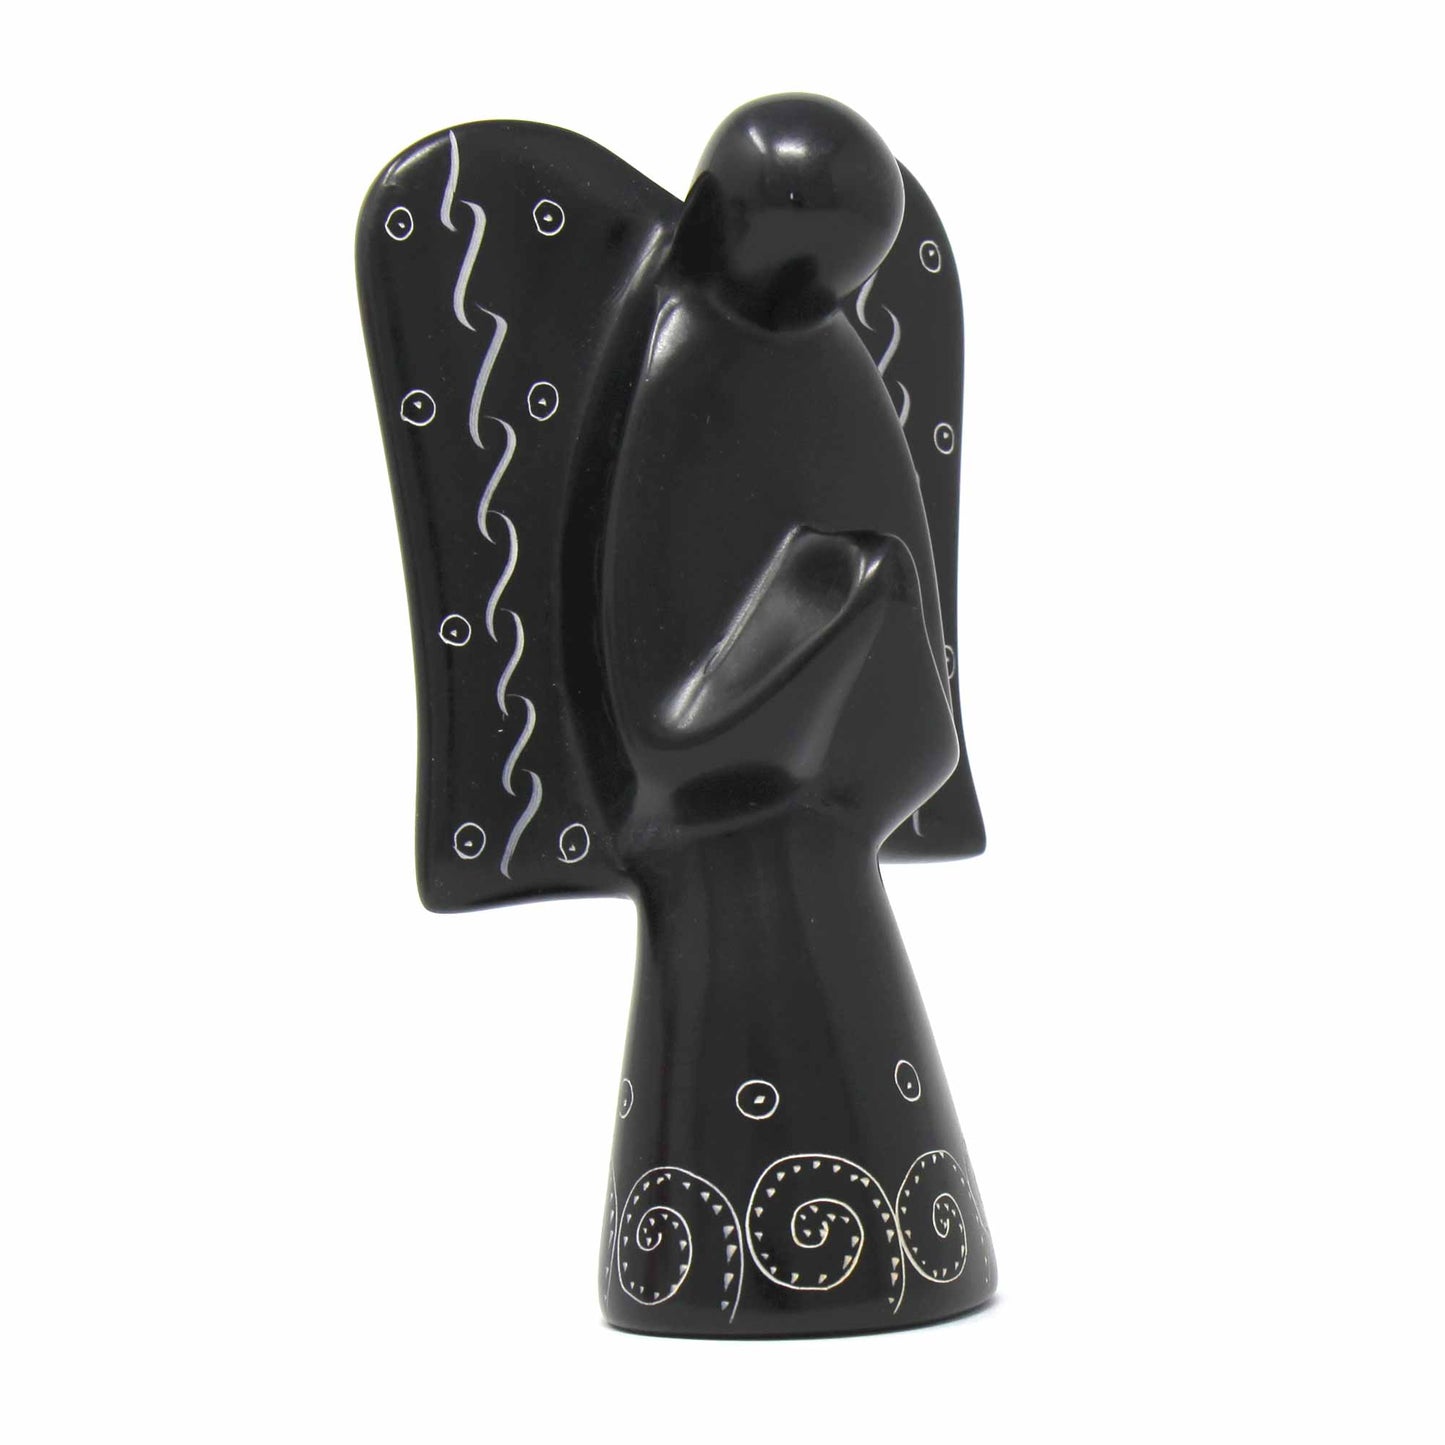 soapstone-angel-sculpture-black-finish-with-etch-design